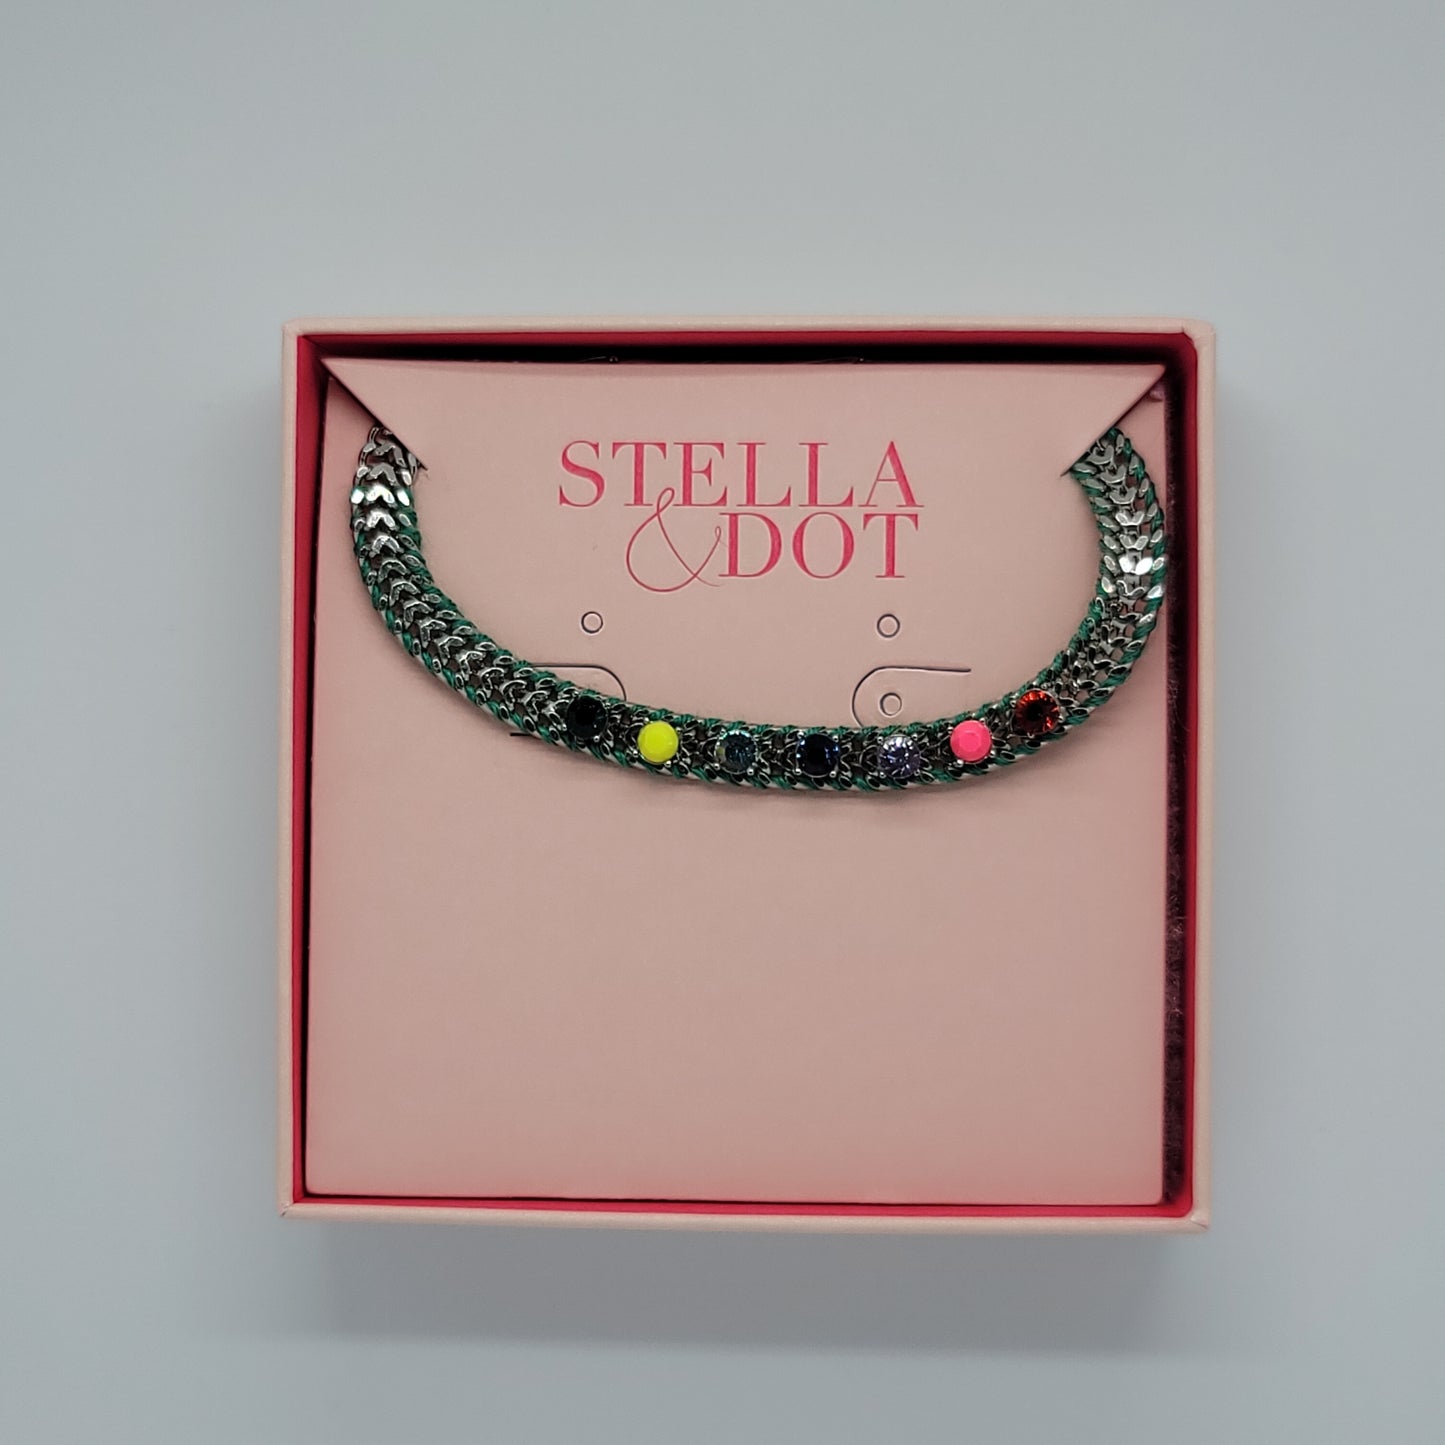 Rainbow friendship bracelet by Stella & Dot